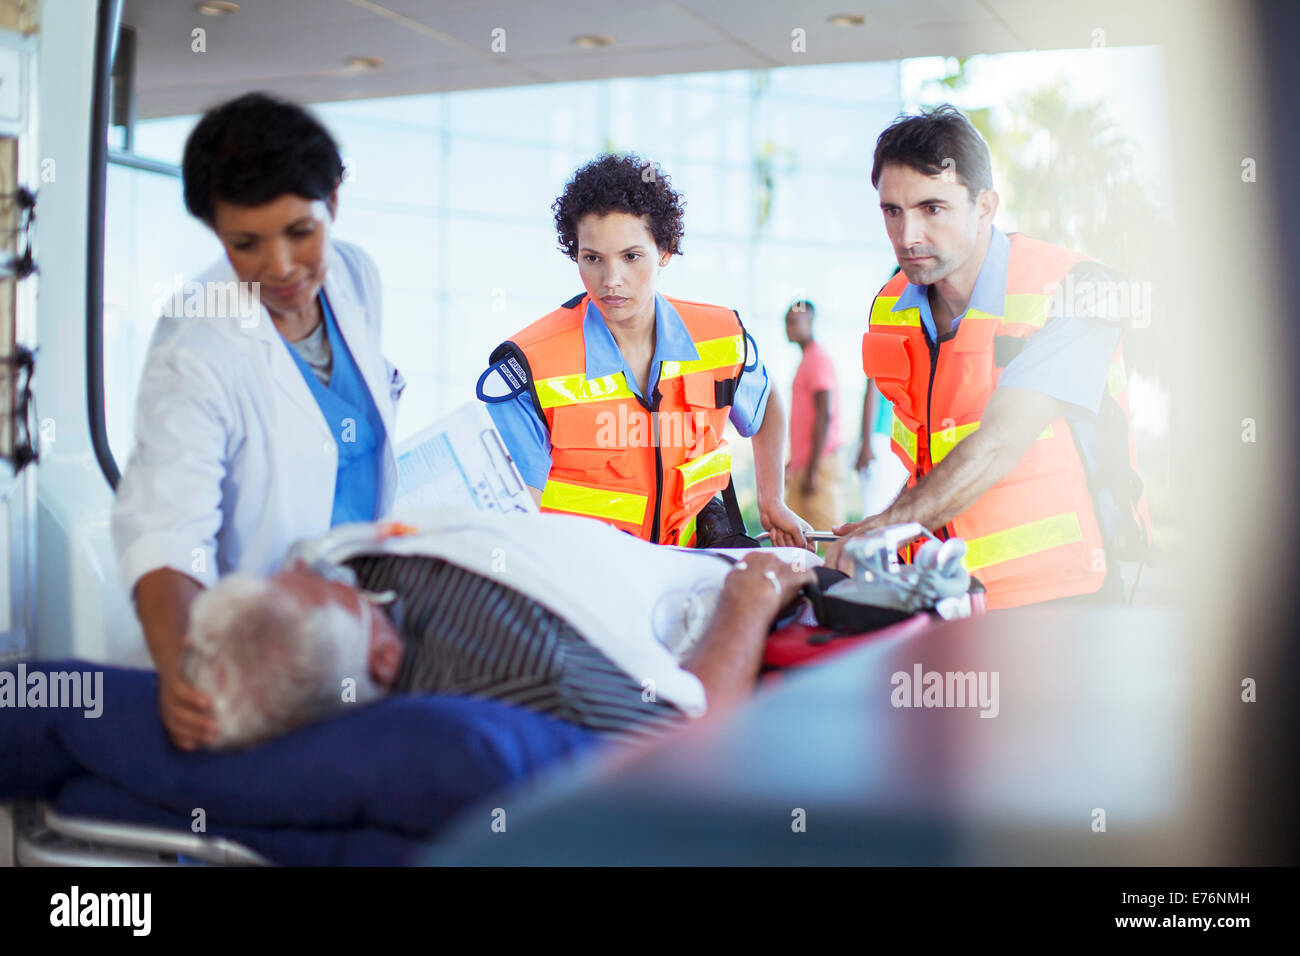 Paramedics and nurse examining patient in ambulance Stock Photo